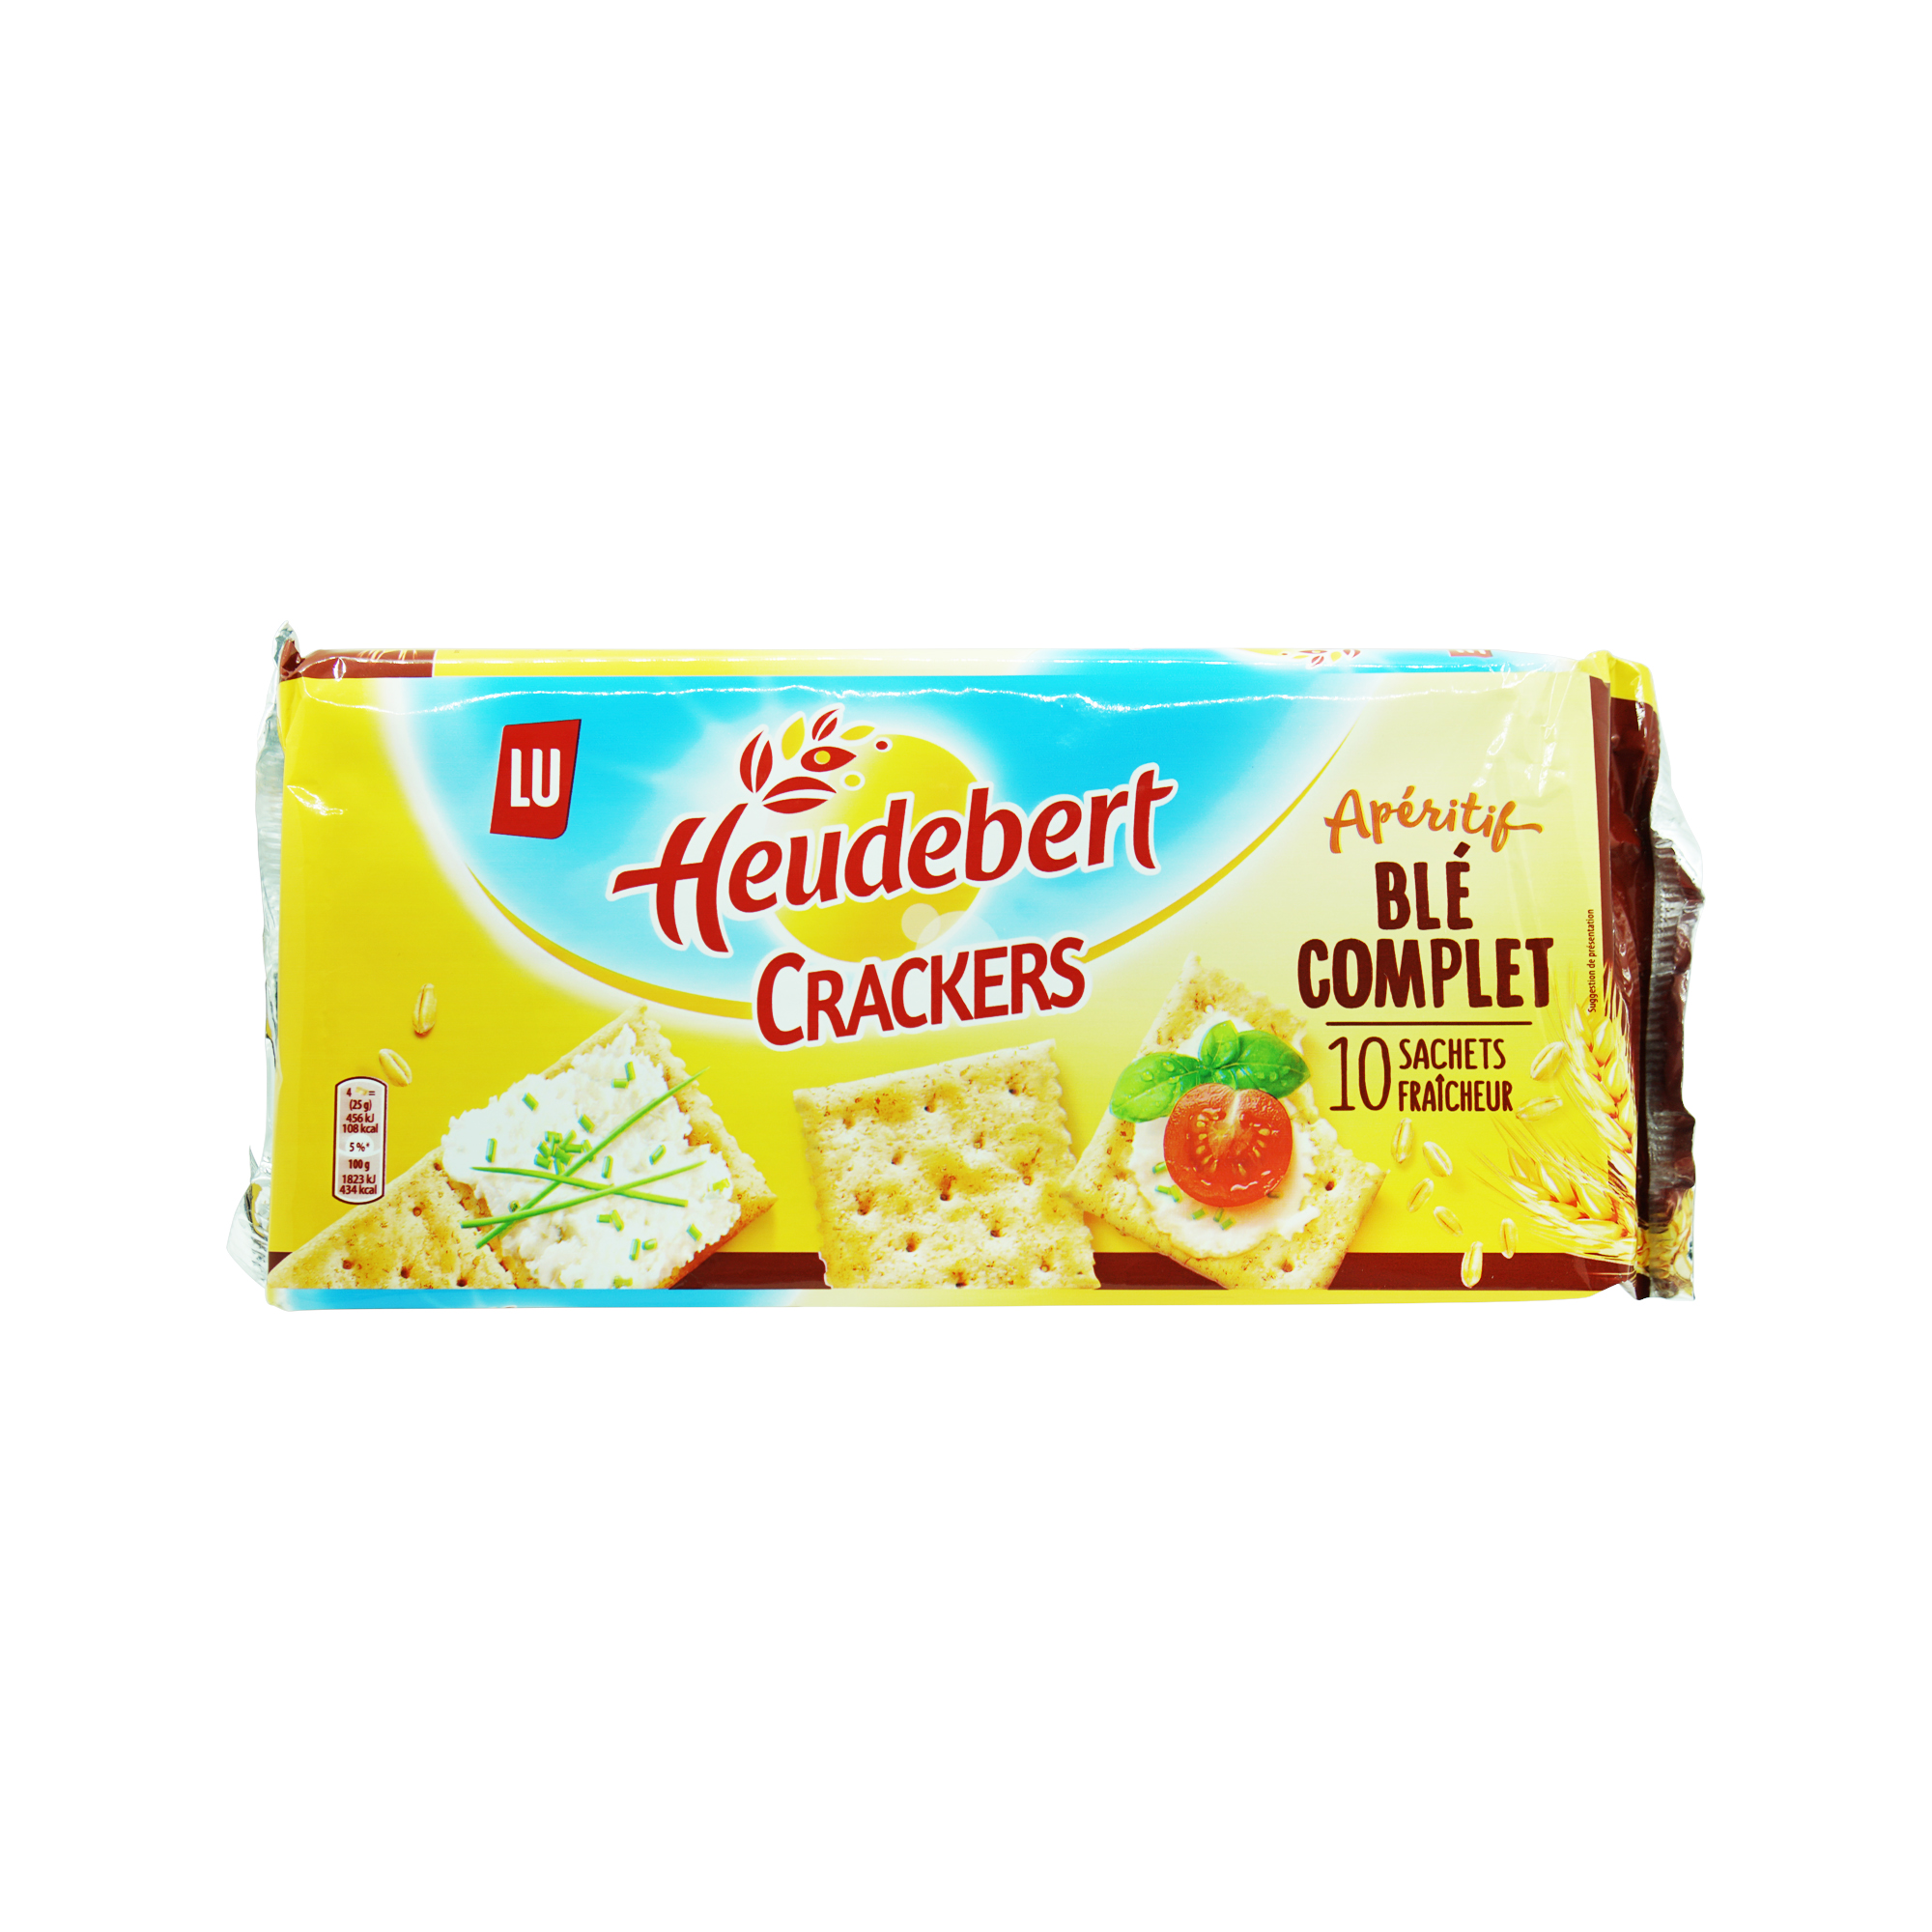 LU Heudebert Crackers Whole Wheat (250g)